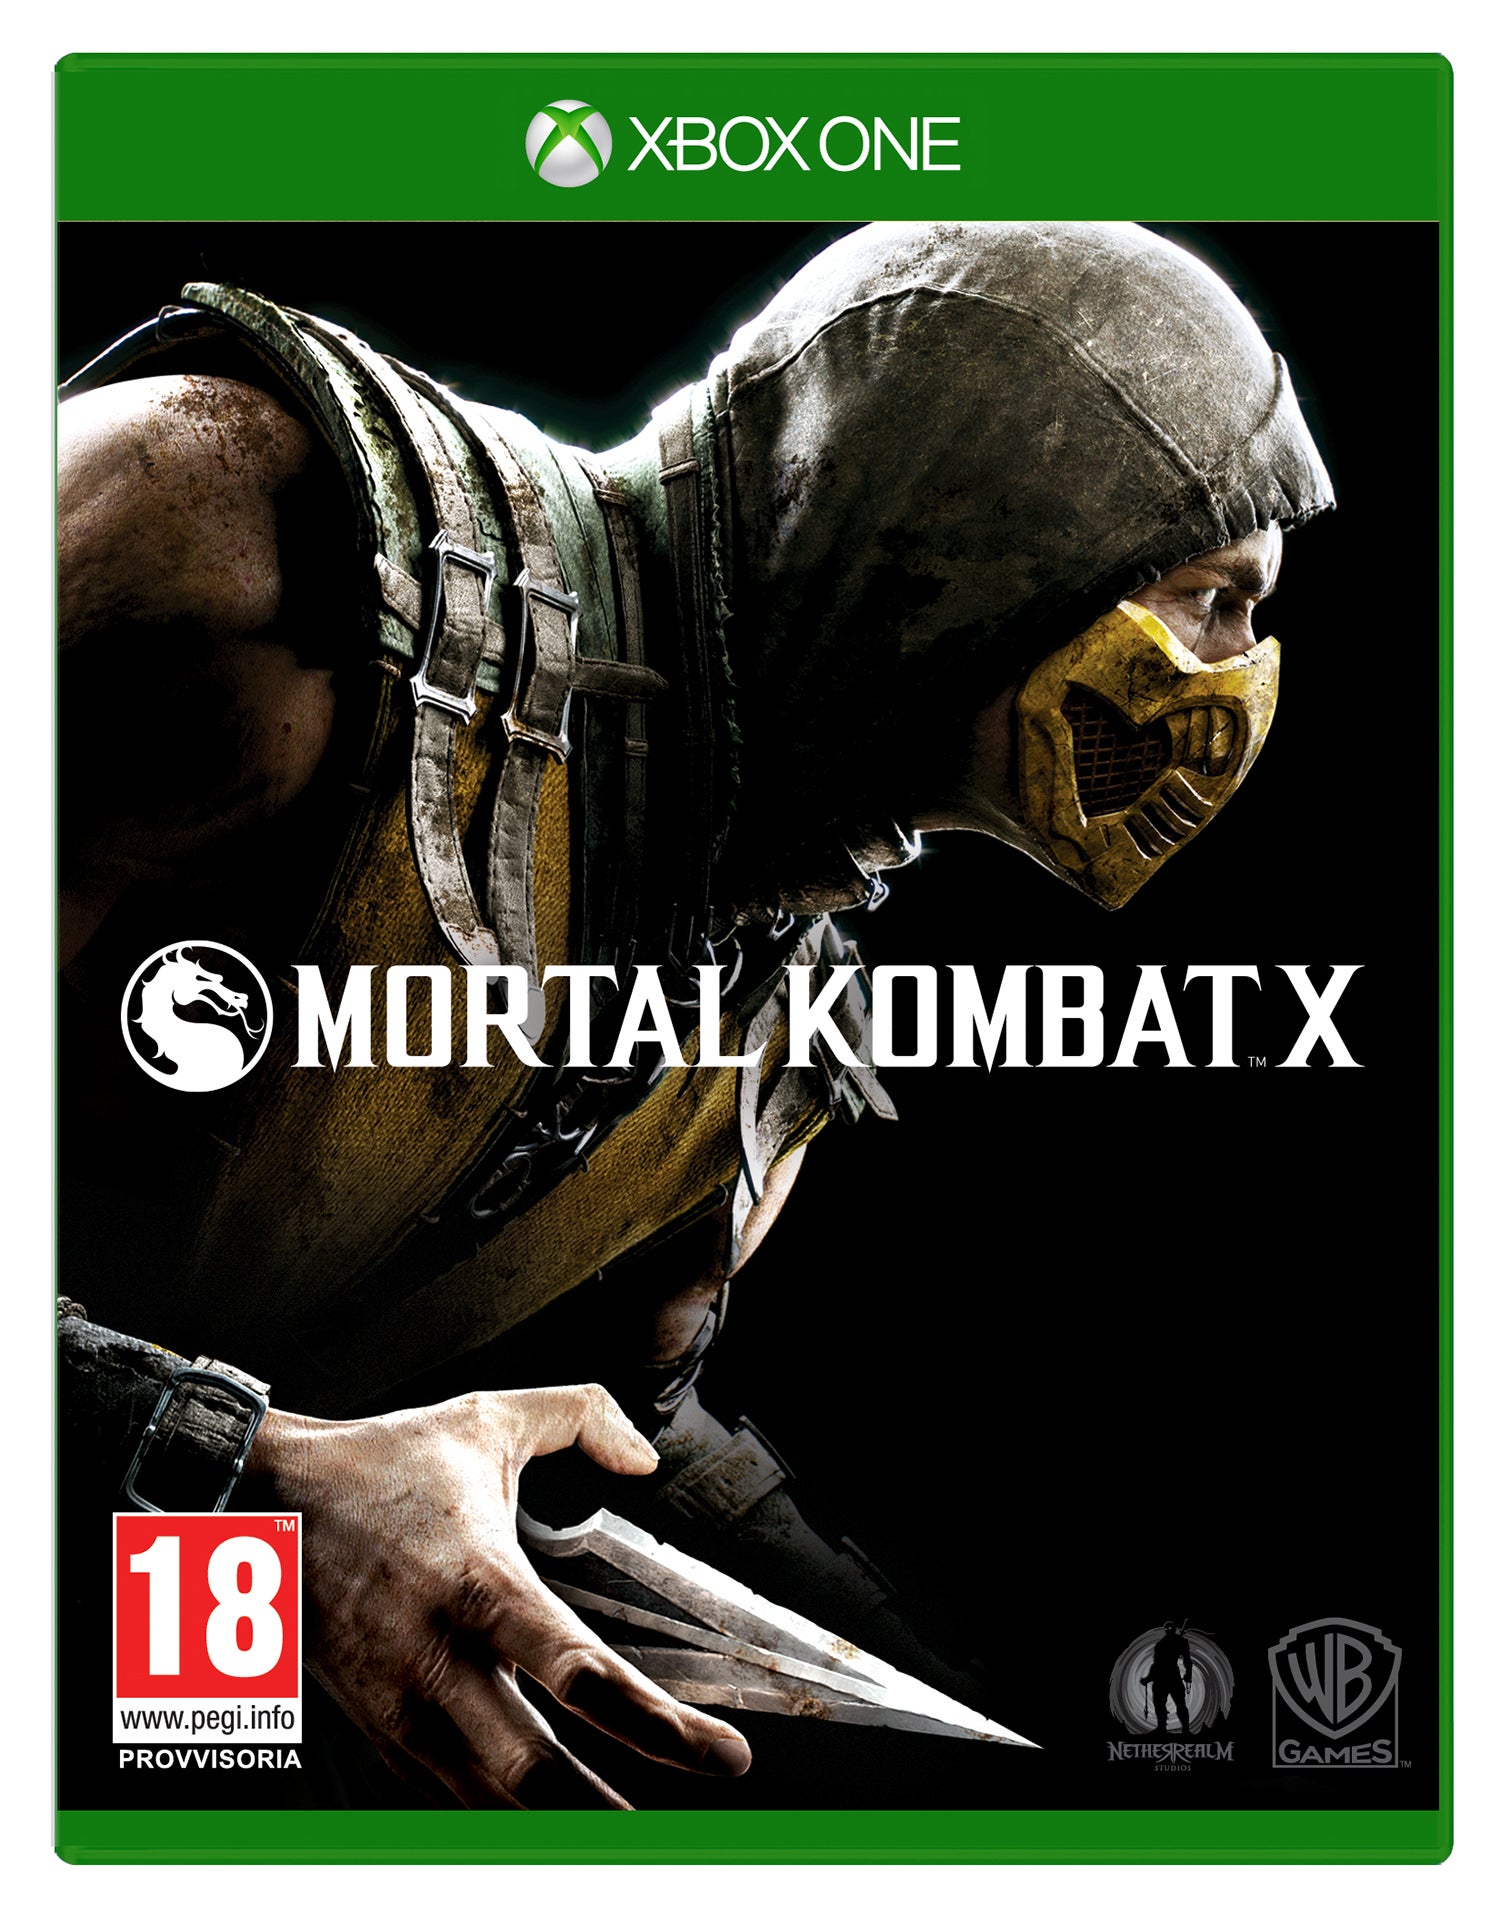 Image for UPDATE: Mortal Kombat X officially confirmed, first details & trailer inside